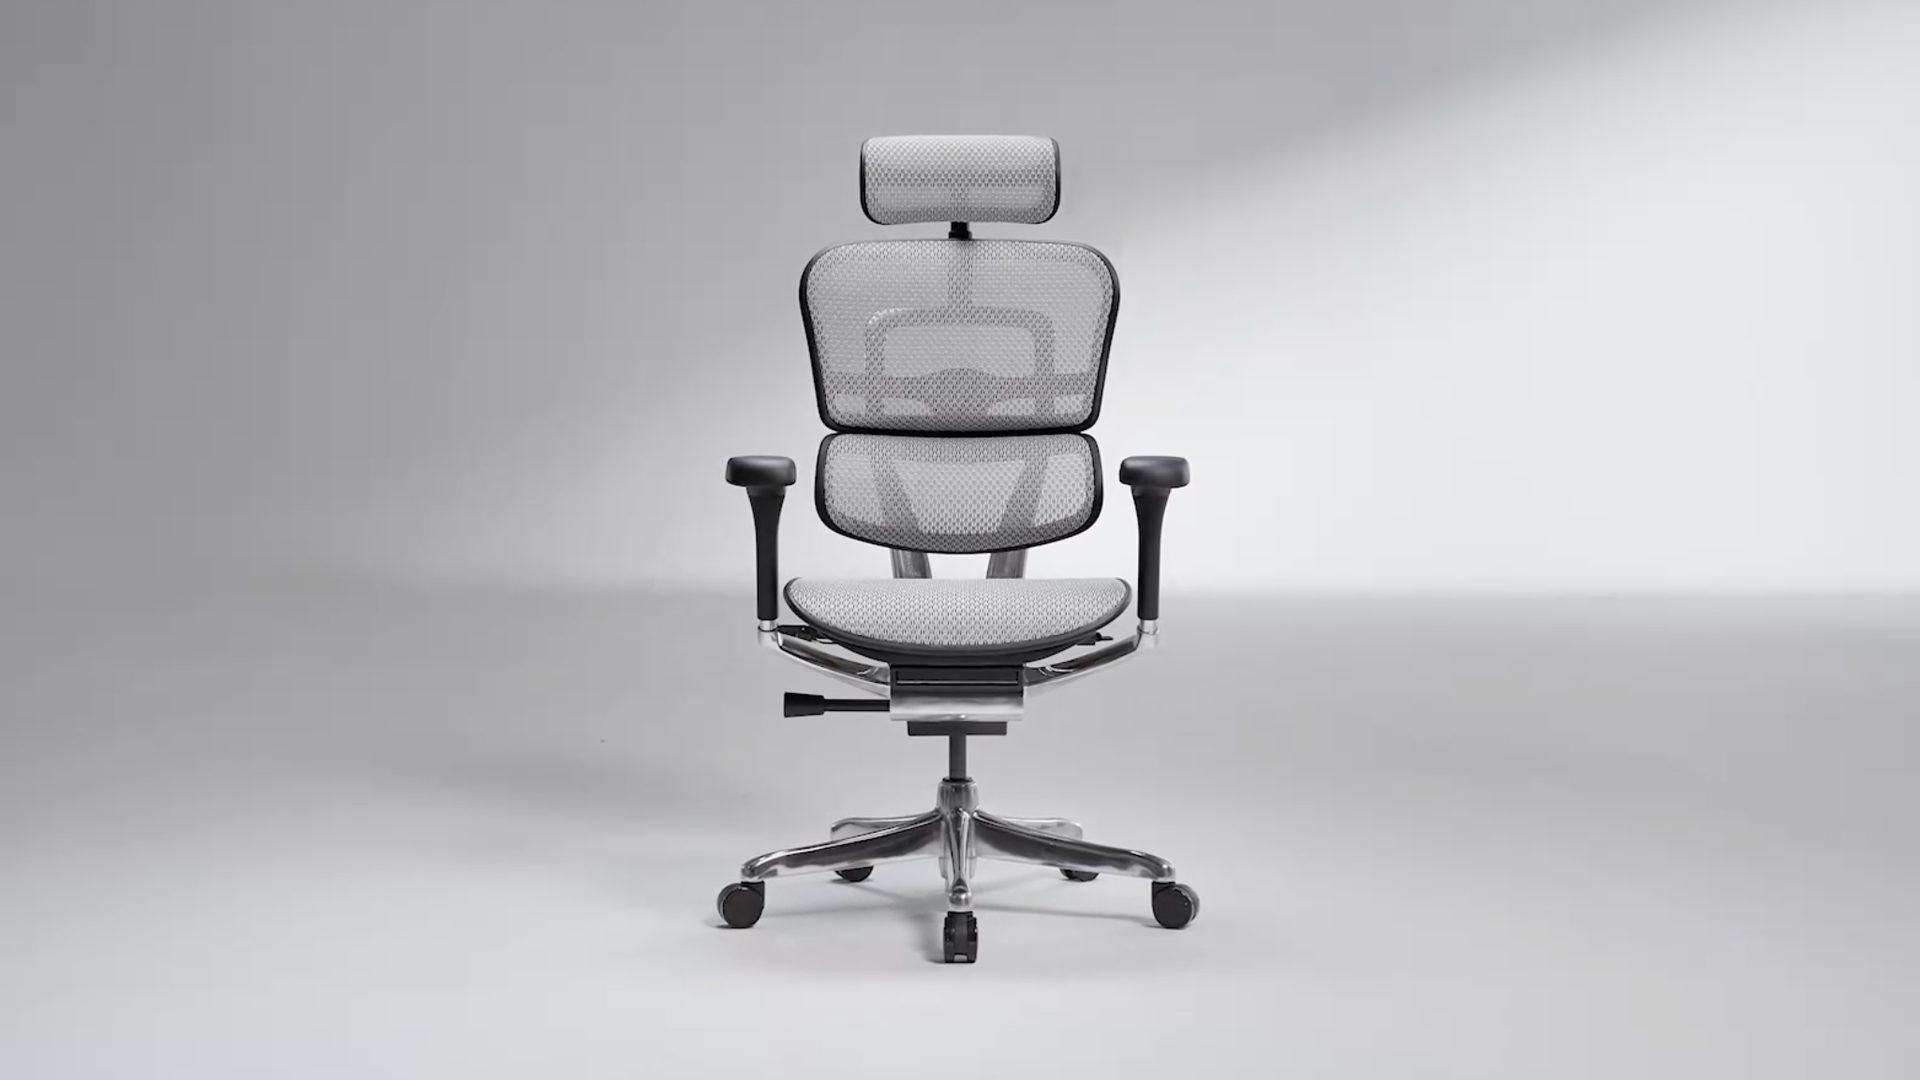 Grey Ergohuman chair in a black frame in an empty light grey room